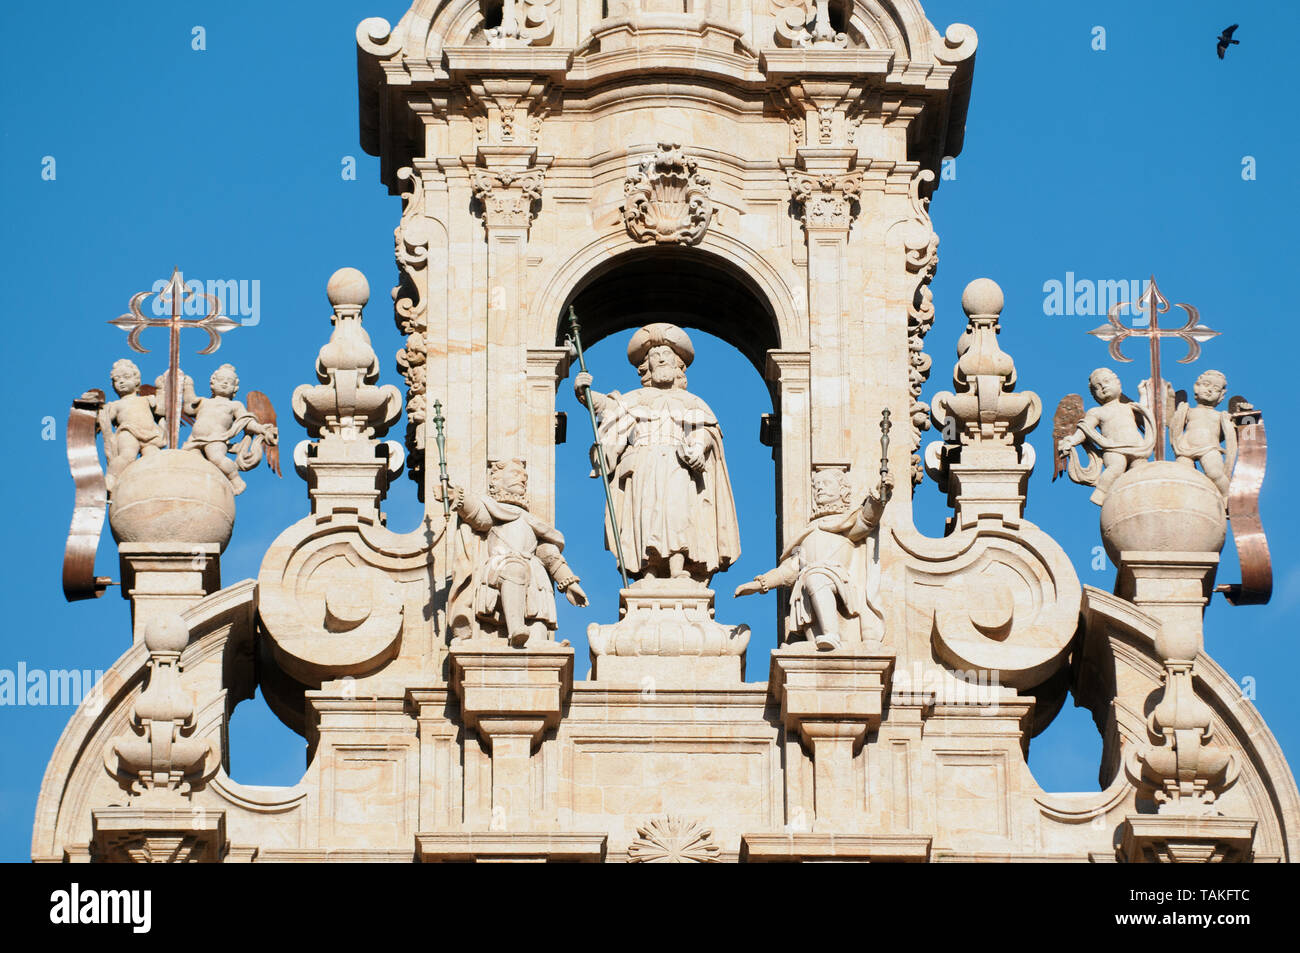 Way of St. James, Cathedral of Santiago, Praza do Obradoiro, Santiago de Compostela Spain. Stock Photo